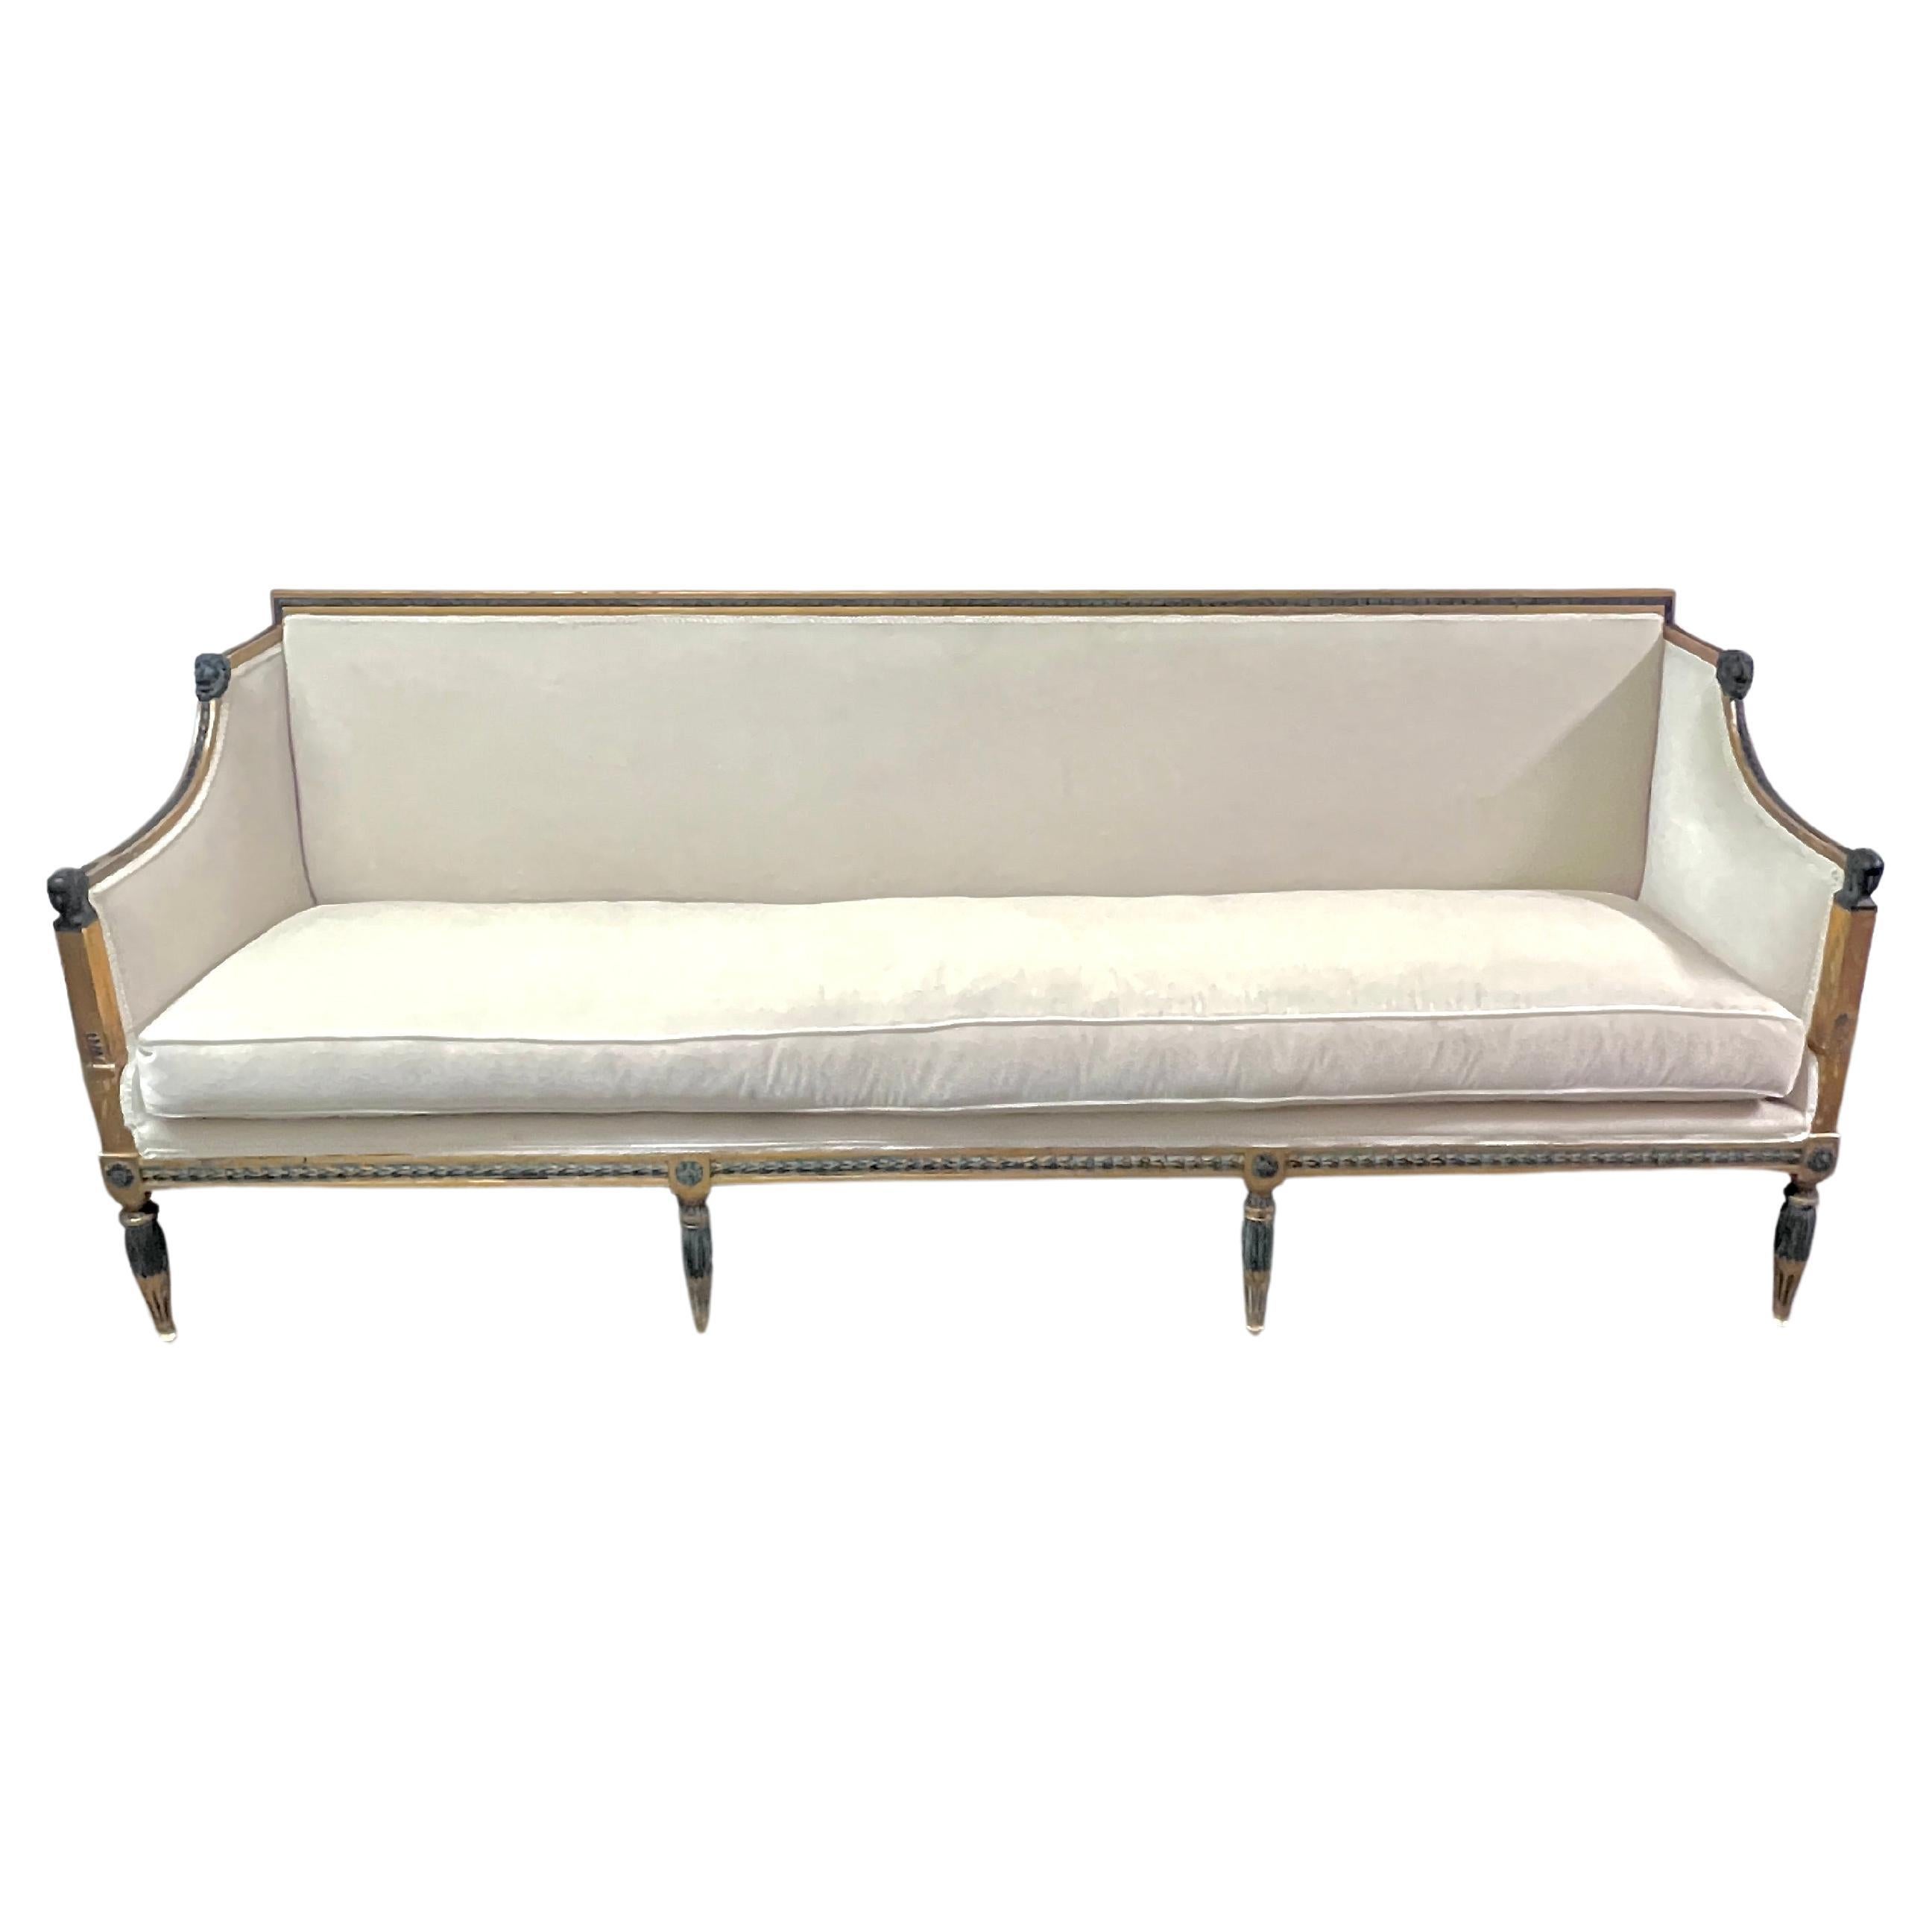 Early 19th century Swedish Gustavian Sofa 